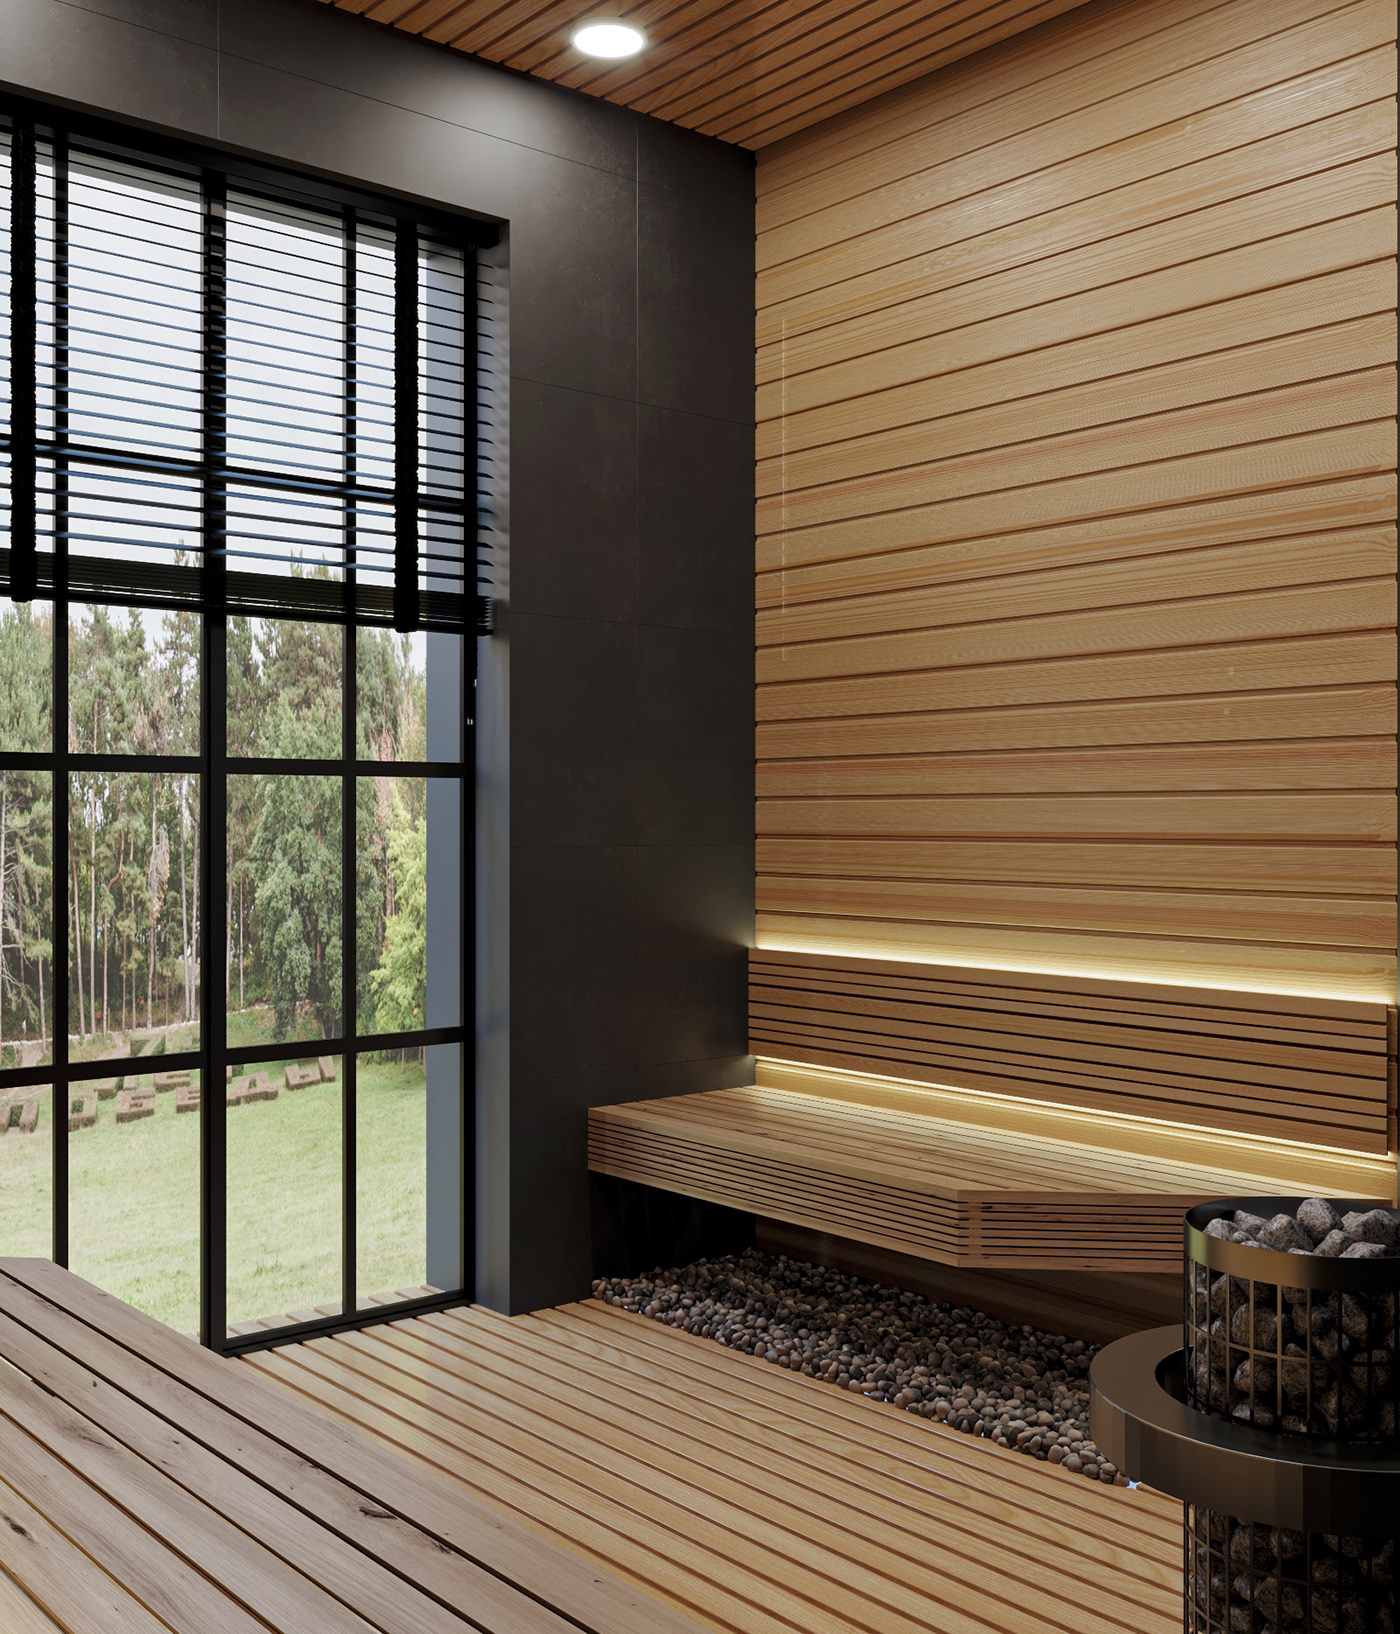 Sauna bathroom interior design  shocking visualization 3ds max